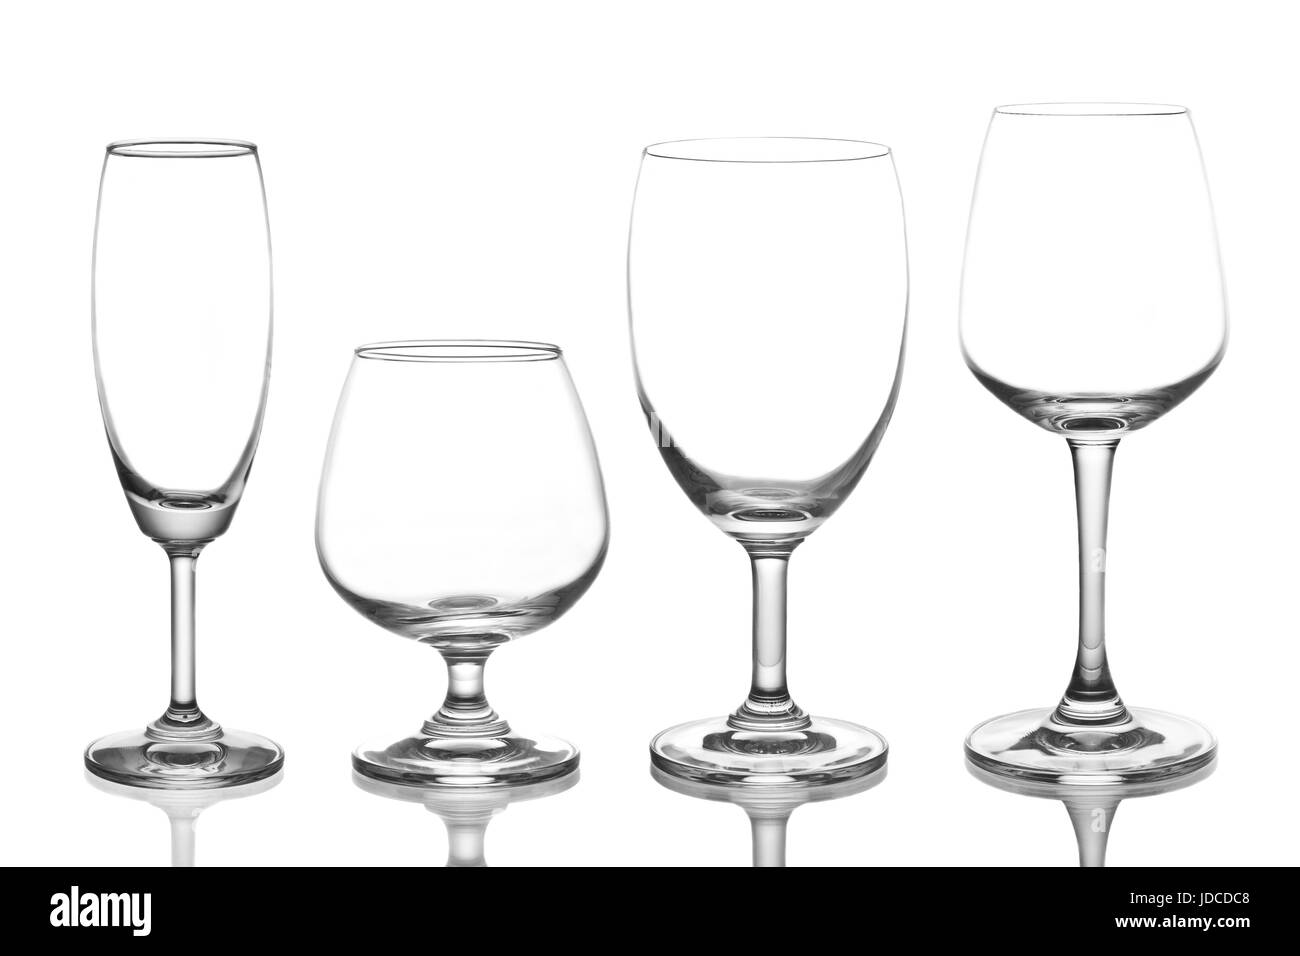 empty wine glass isolated on white background Stock Photo